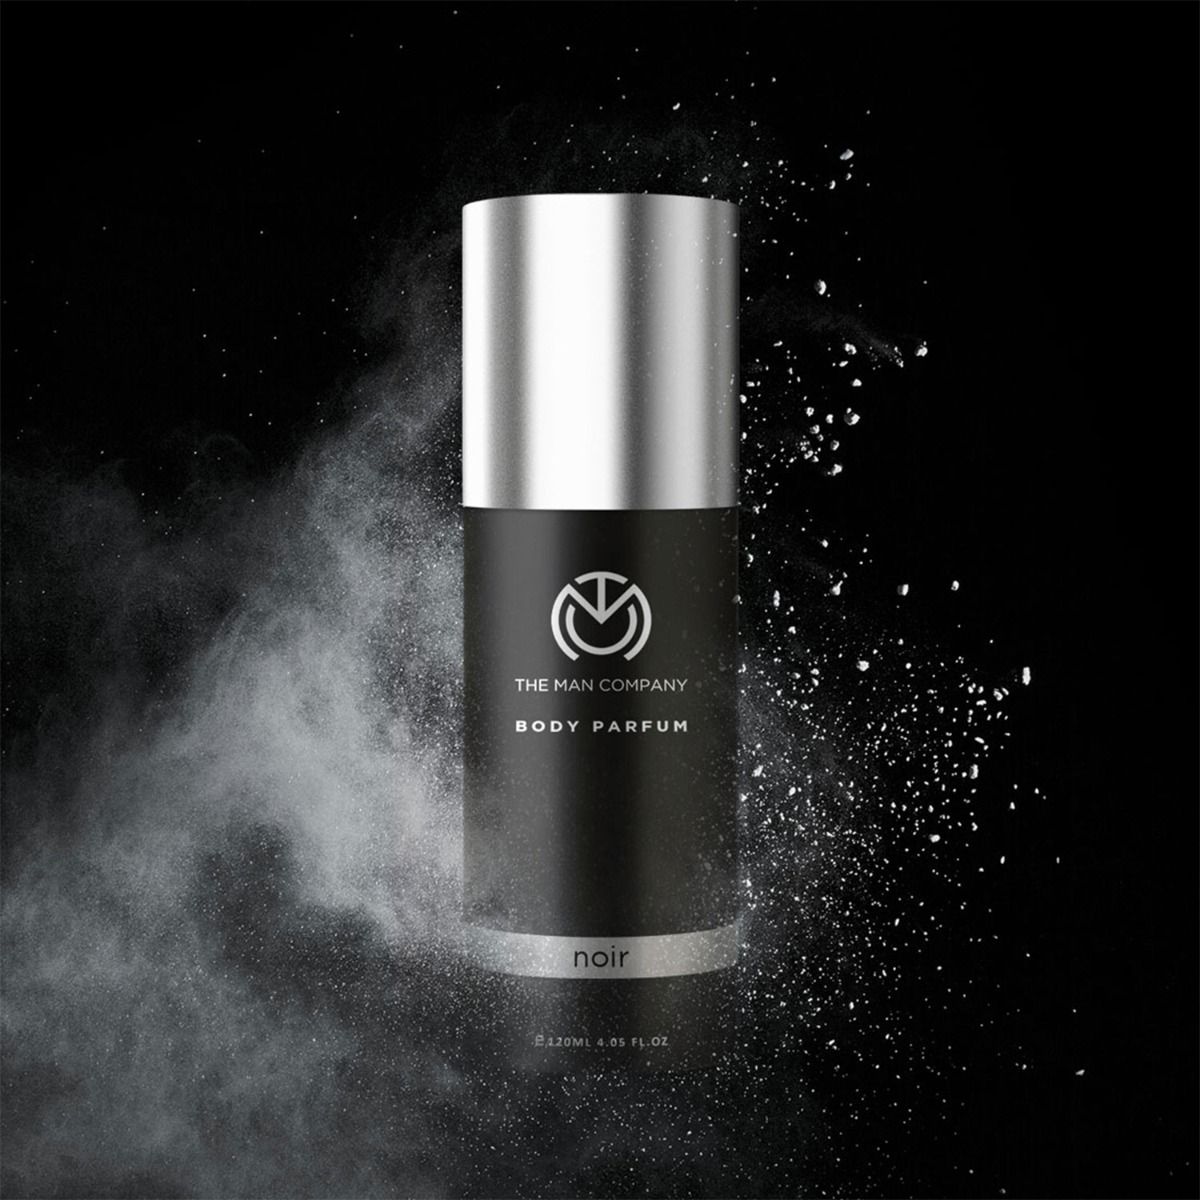 The Man Company Noir Body Parfum (120 ml) The Man Company